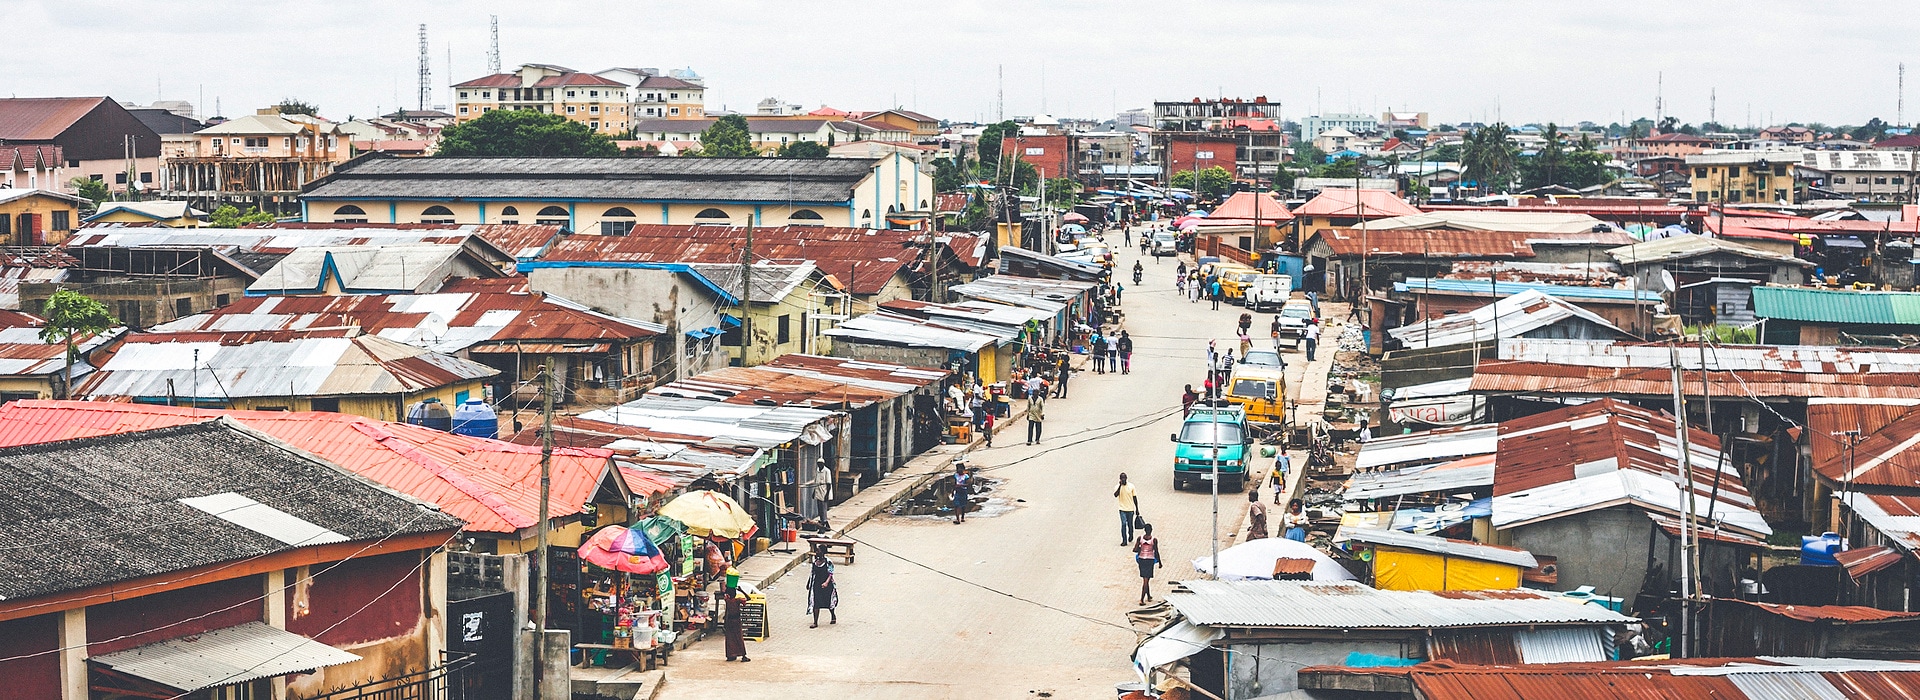 Yaba area. Lagos, Nigeria, West Africa.